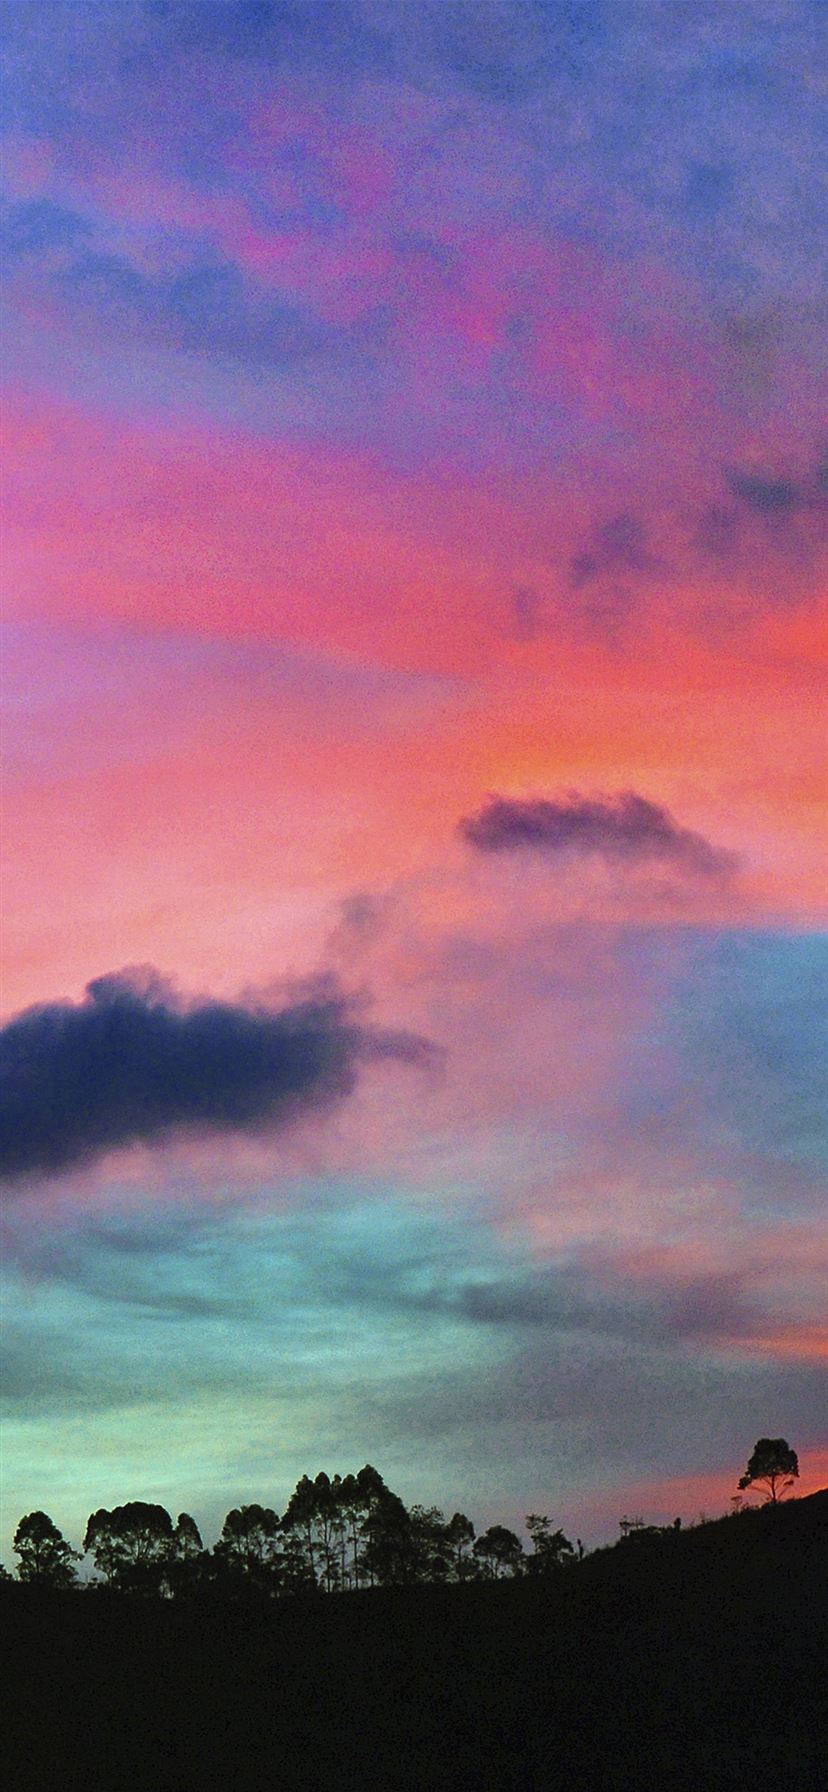 Sky rainbow cloud sunset iPhone X Wallpaper Free Download